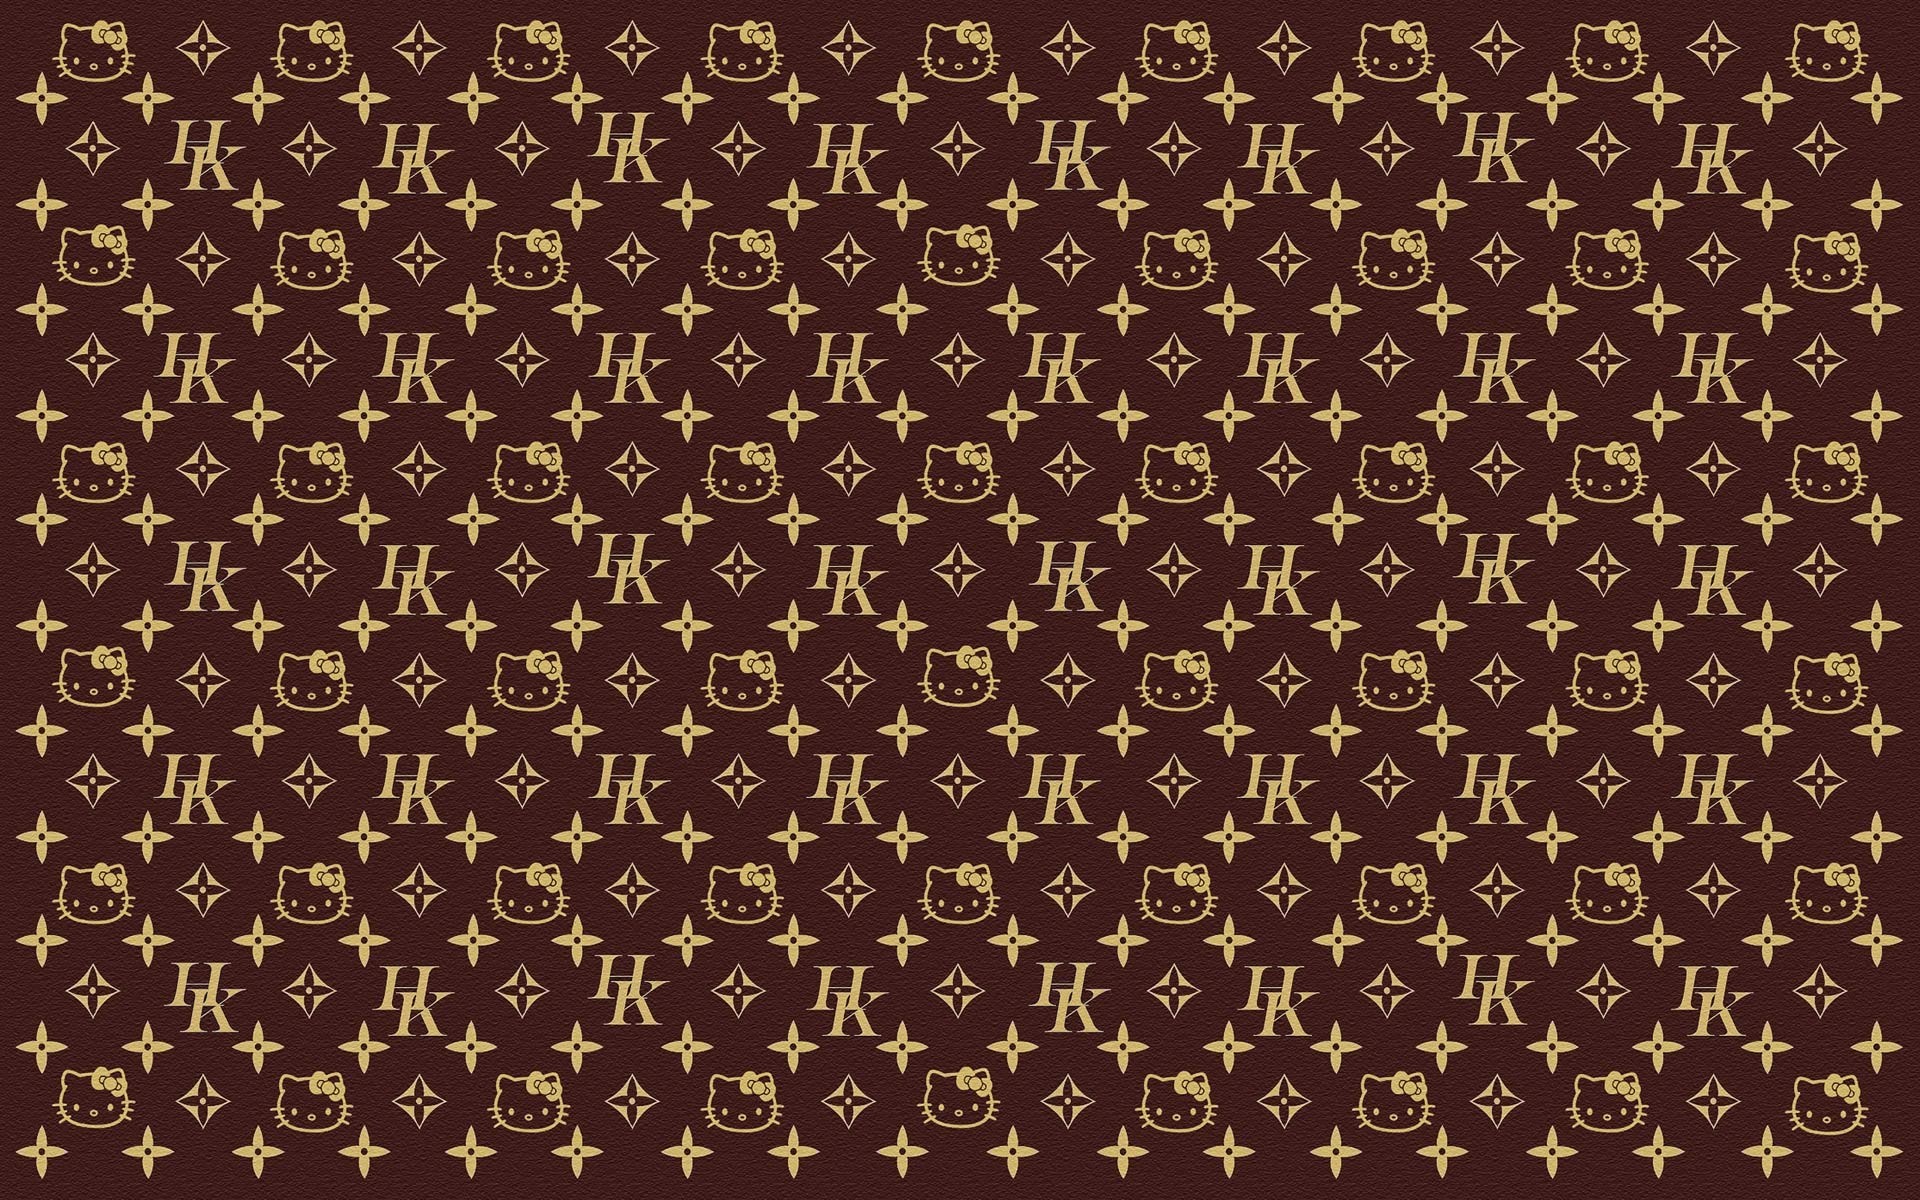 Louis Vuitton Wallpapers HD | PixelsTalk.Net